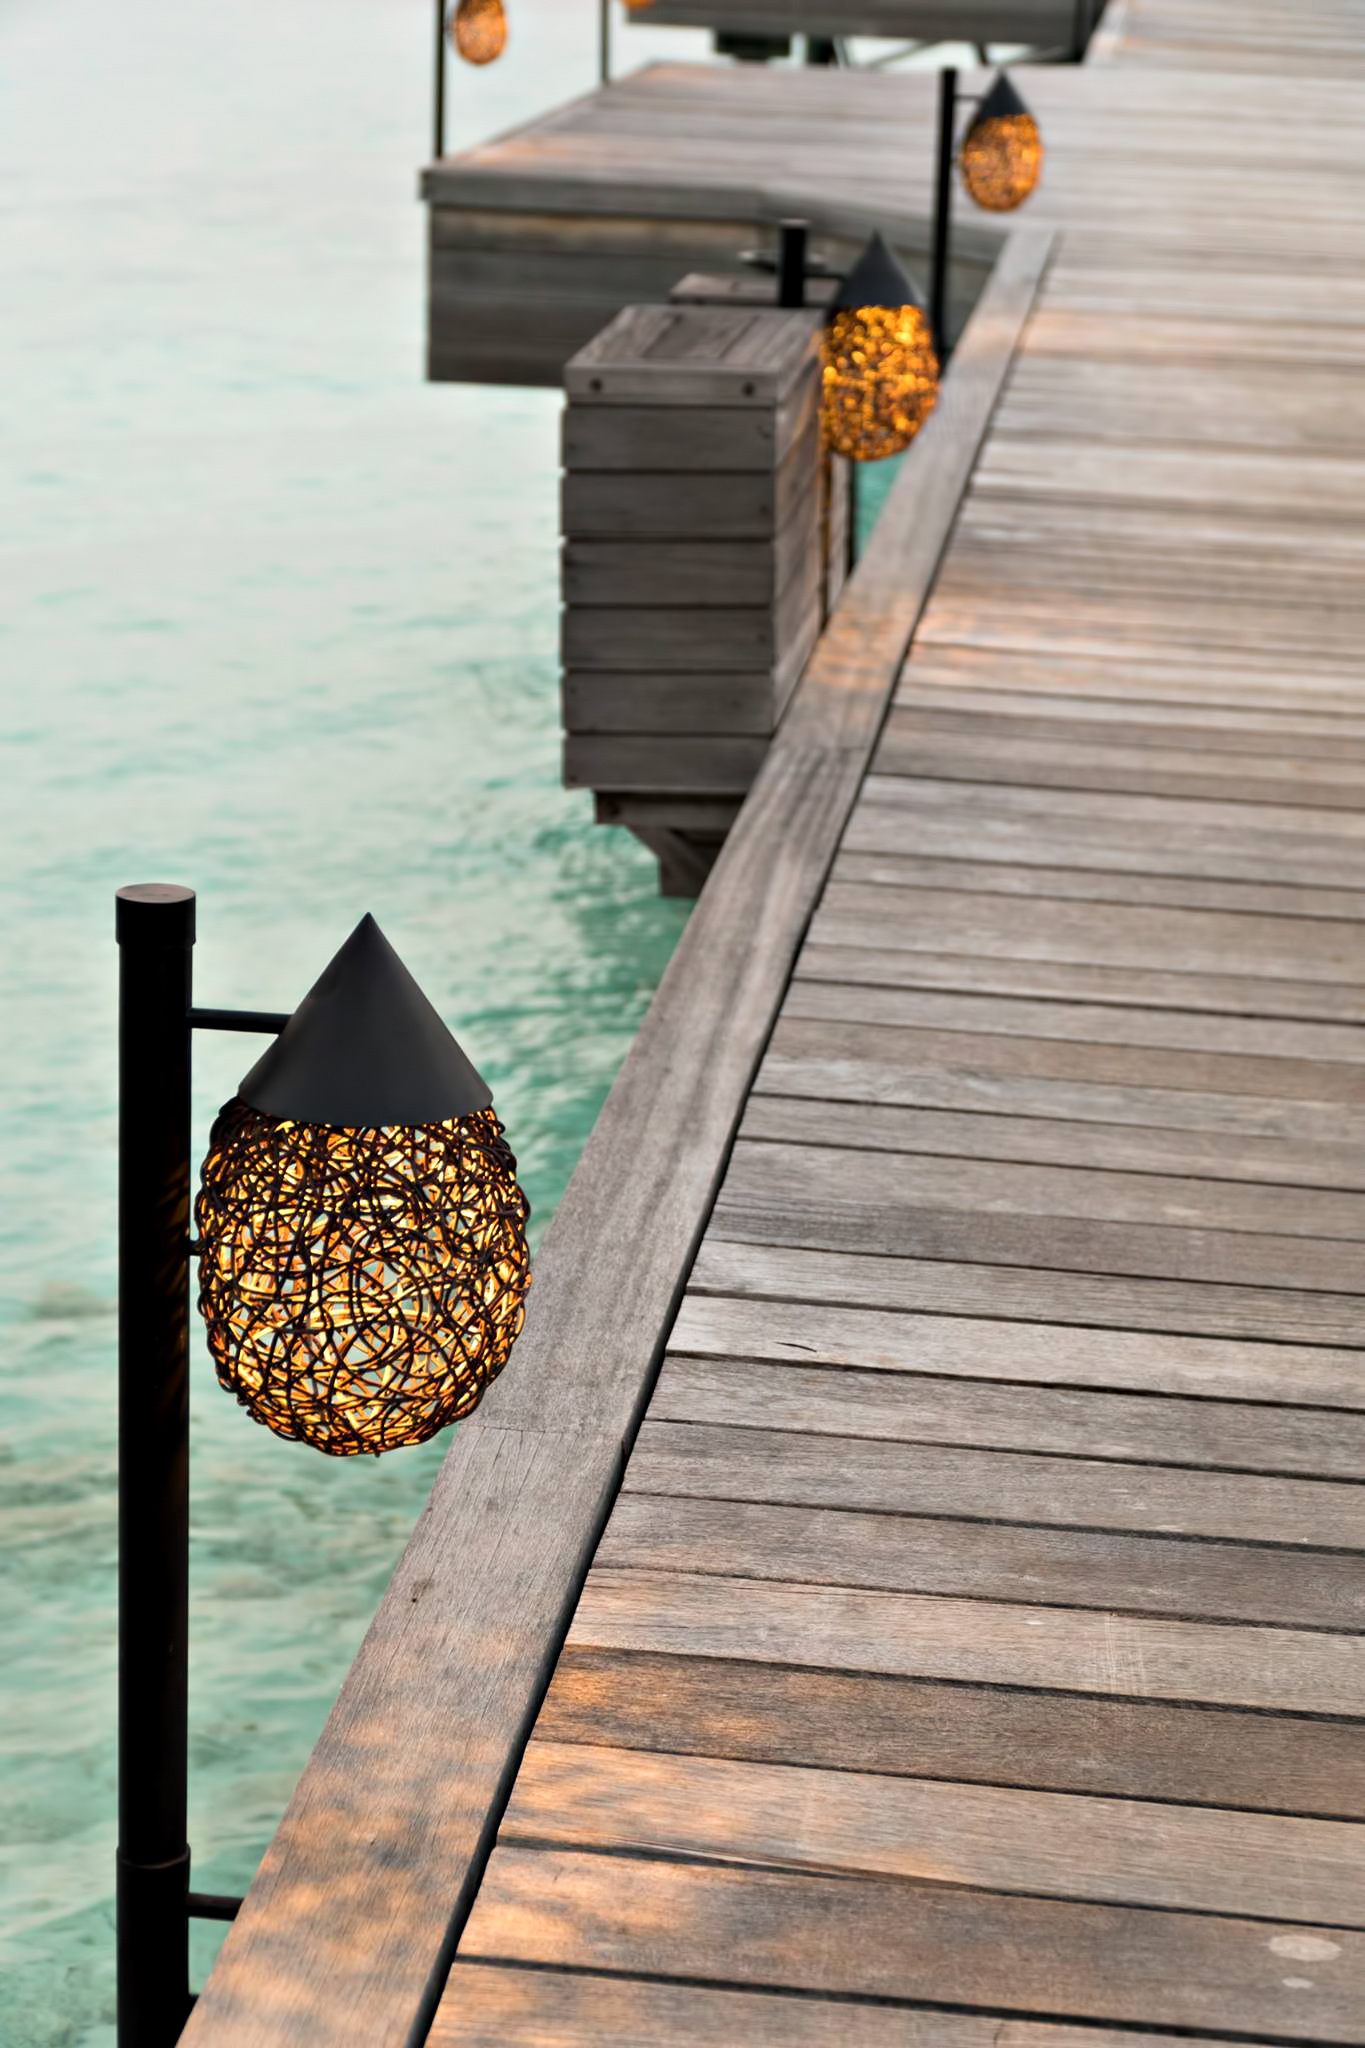 Cheval Blanc Randheli Resort – Noonu Atoll, Maldives – Private Island Resort Overwater Boardwalk